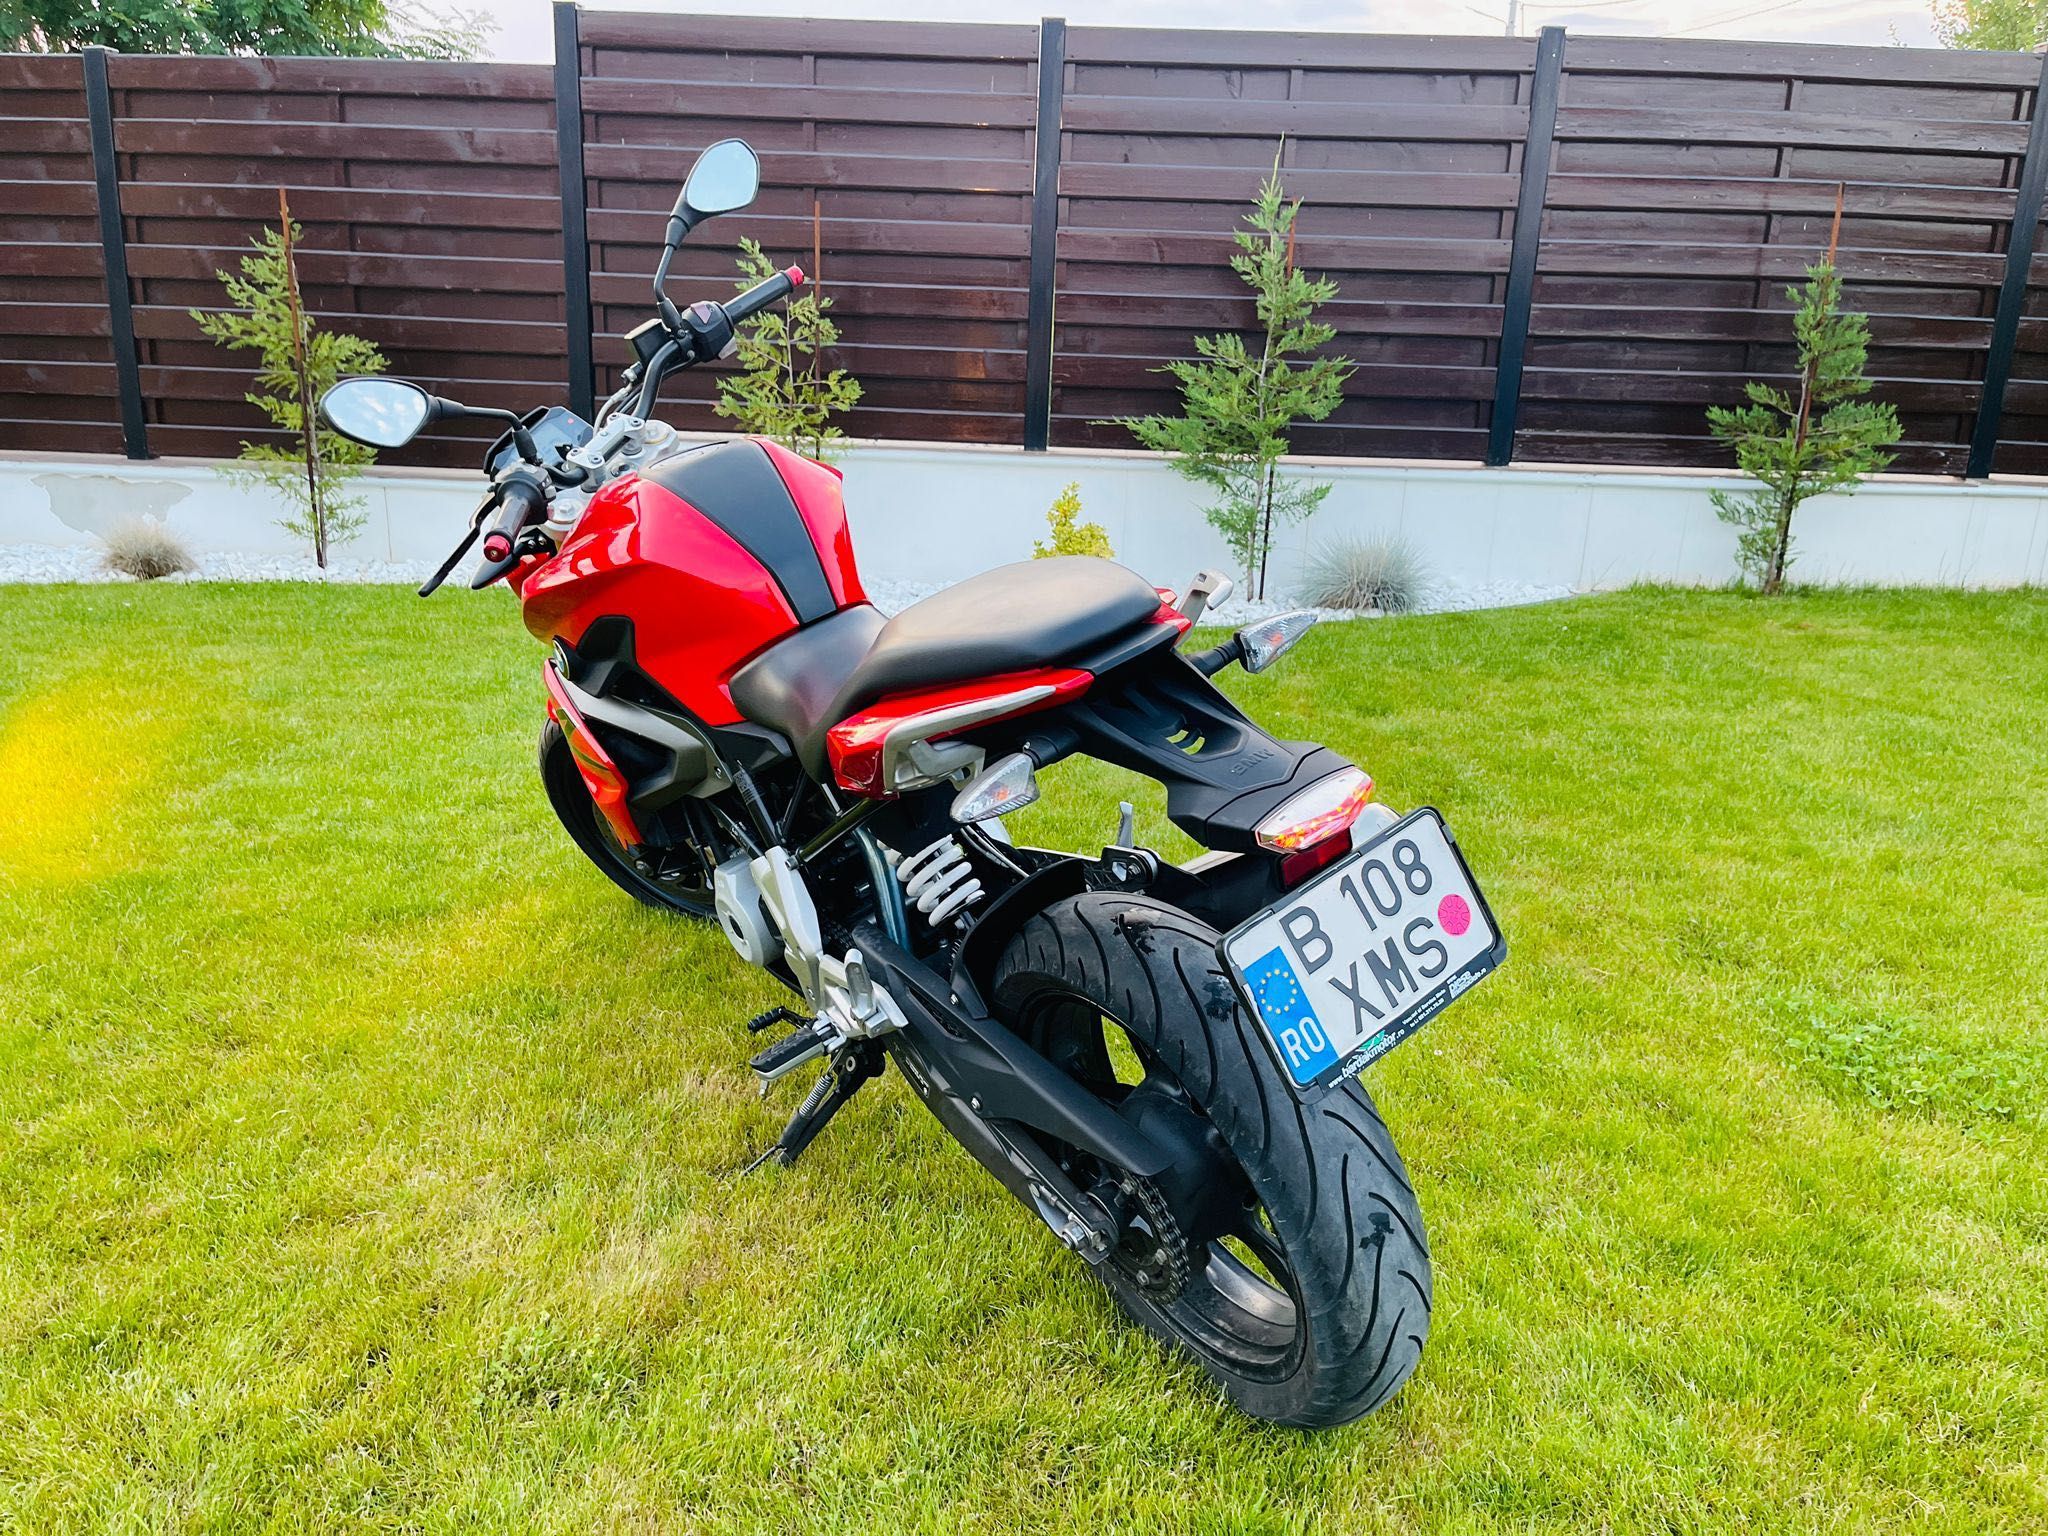 BMW G 310 R-motociclu L3e,09/2019. ABS ,7000 km,313 cm3